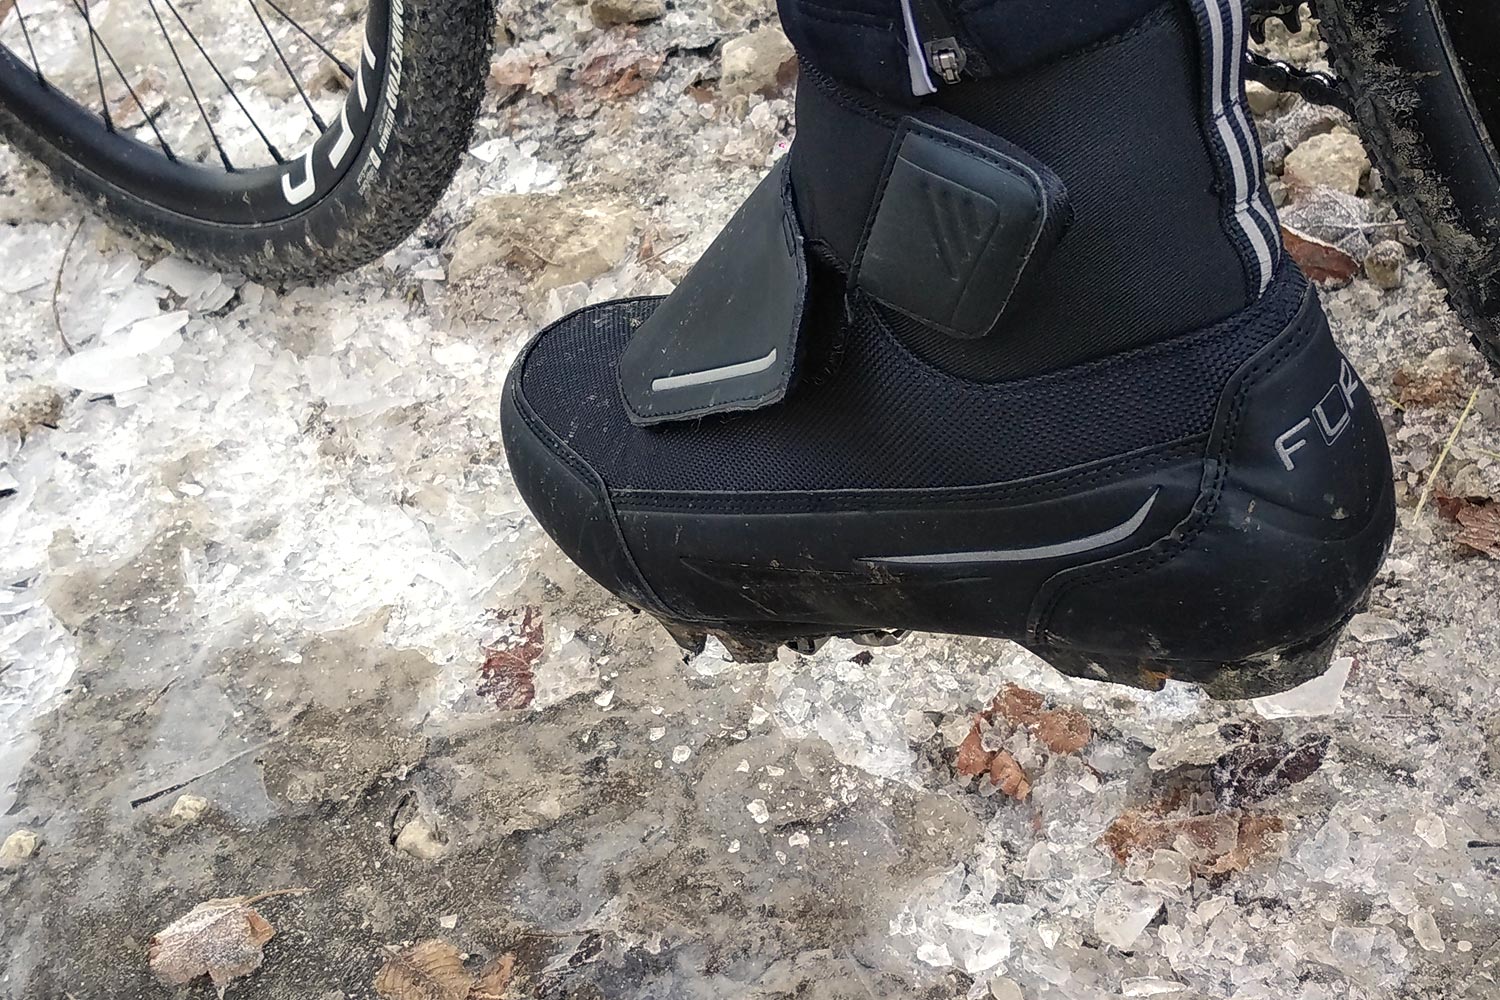 Test des chaussures vélo FLR Defender